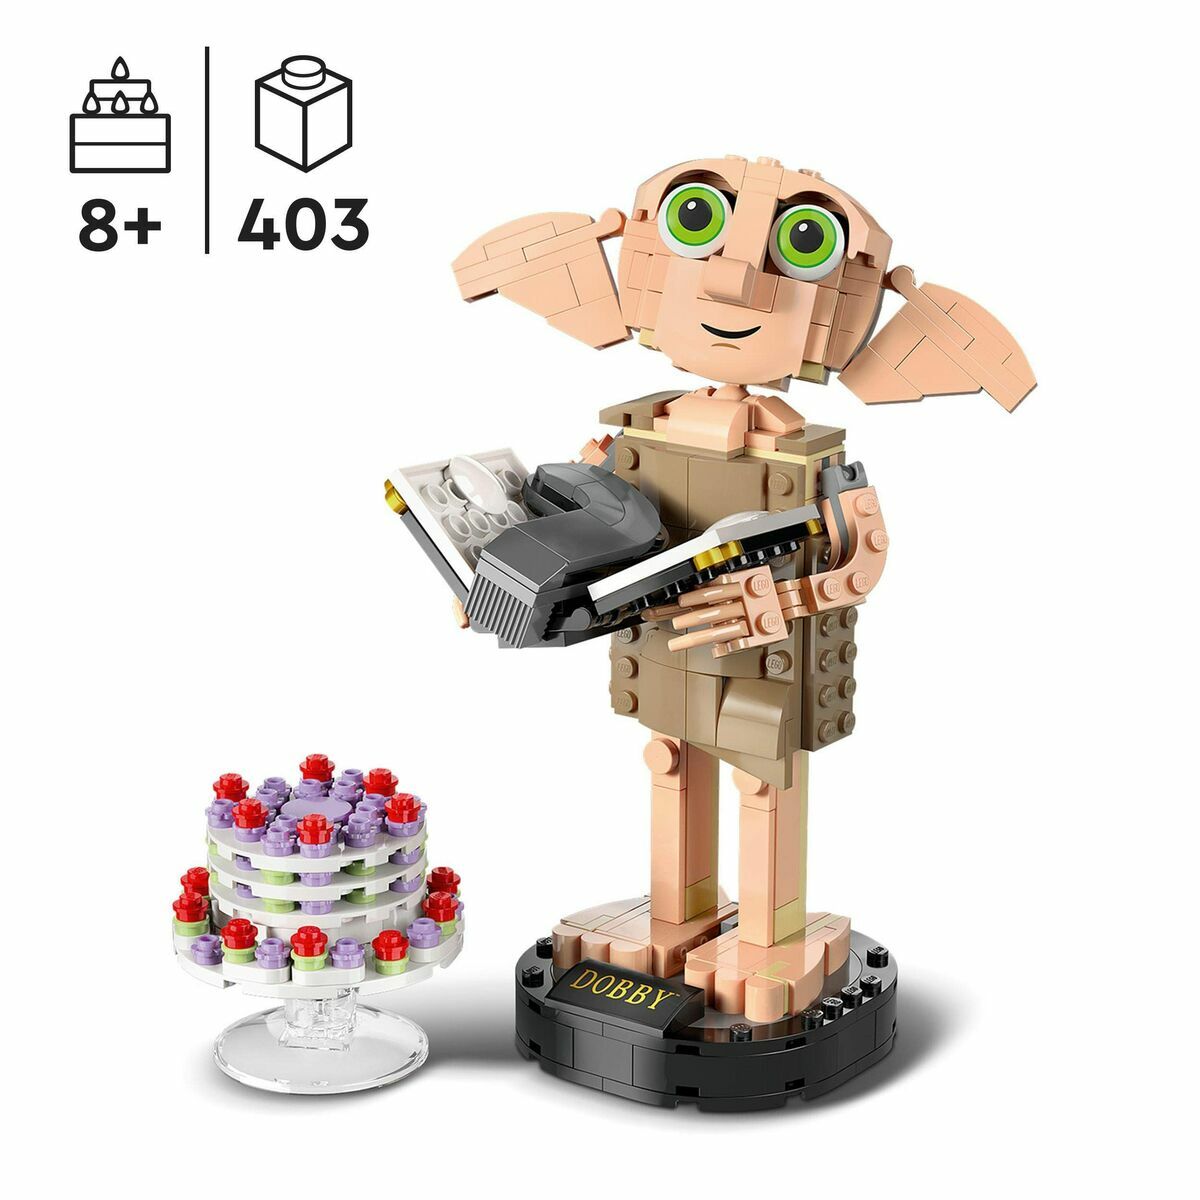 Playset Lego 76421 Harry Potter: Dobby the House-Elf-Leksaker och spel, Dockor och actionfigurer-Lego-peaceofhome.se